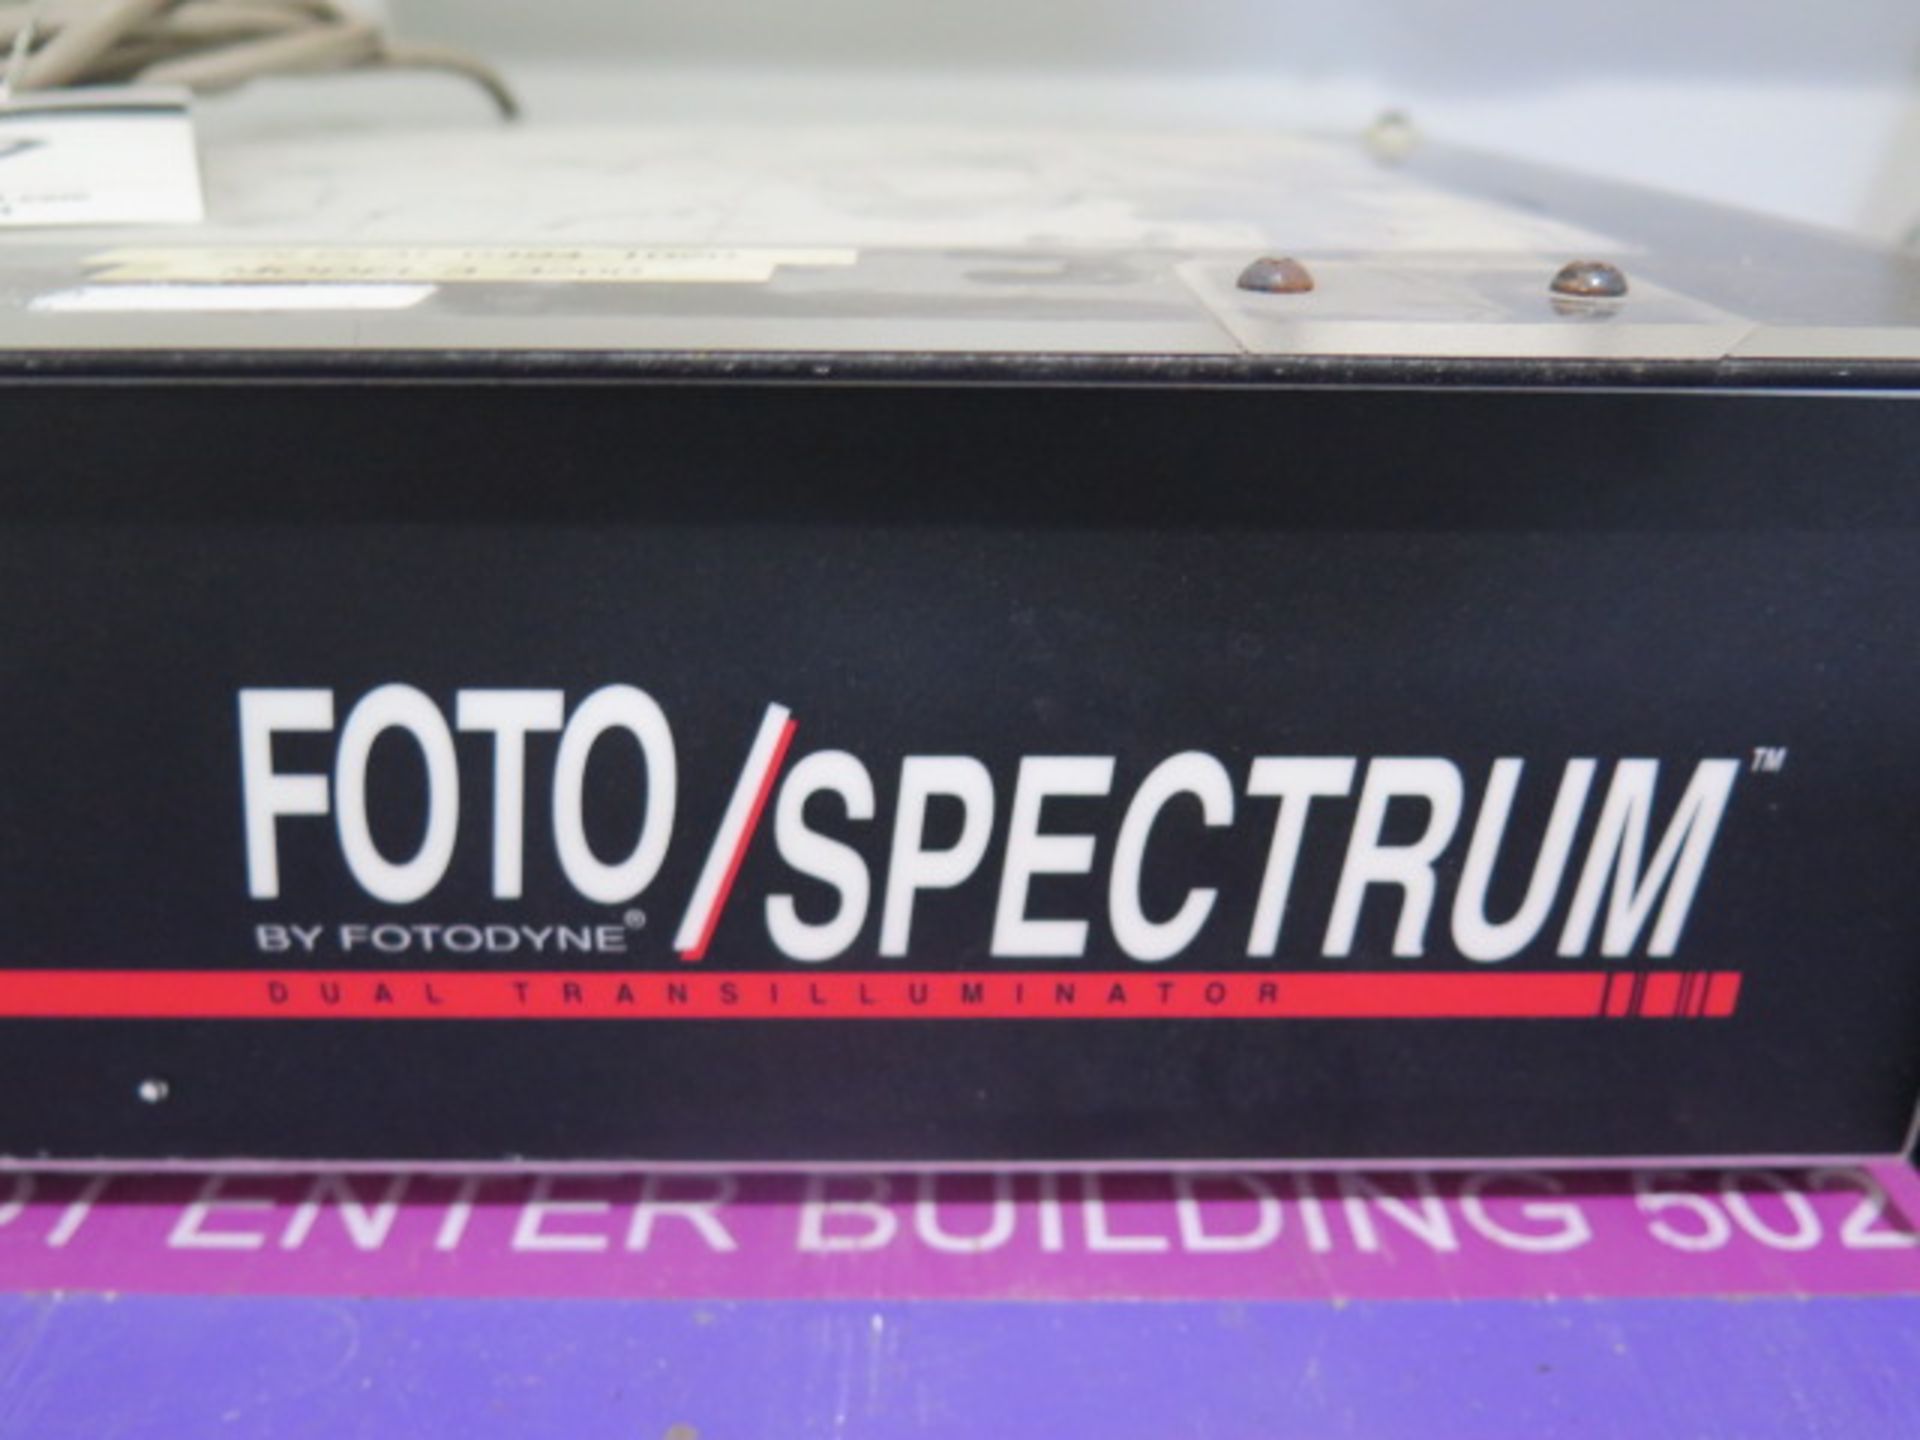 Fotodyne Foto/Spectrum Dual Transilluminator (SOLD AS-IS - NO WARRANTY) - Image 5 of 5